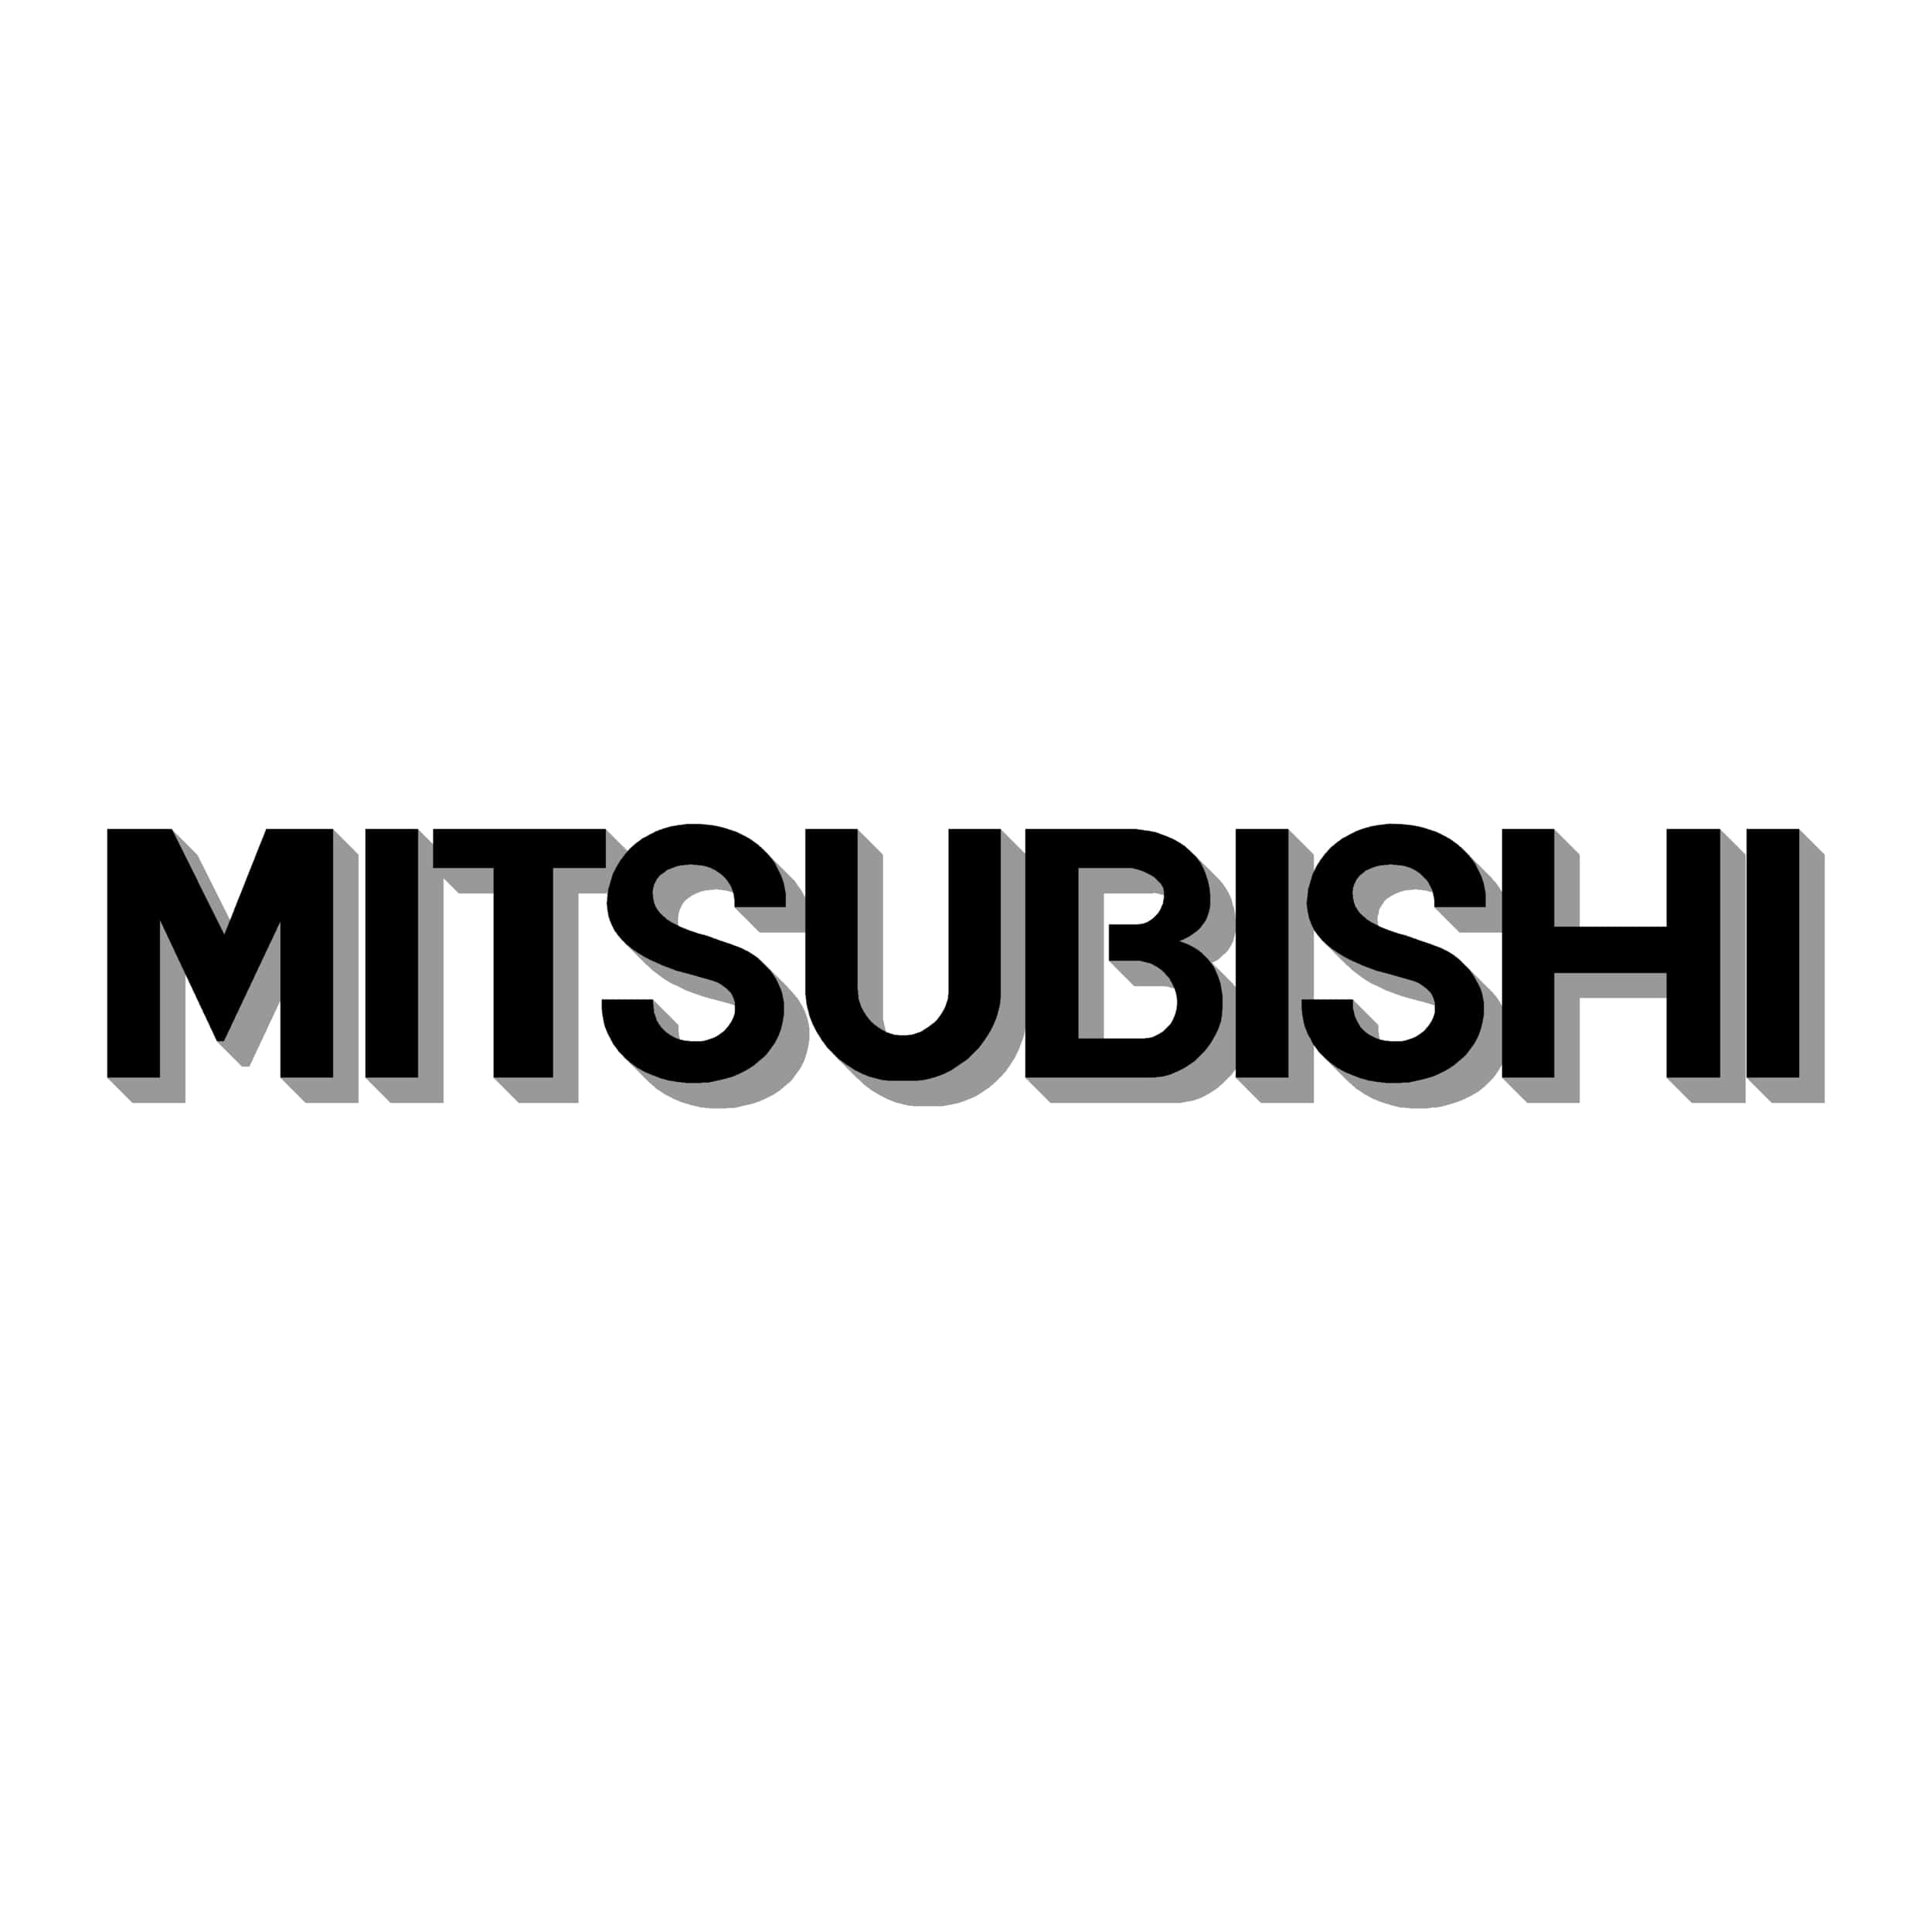 sticker-mitsubishi-ref-21-logo-l200-pajero-sport-4x4-land-tout-terrain-competition-rallye-autocollant-stickers-min